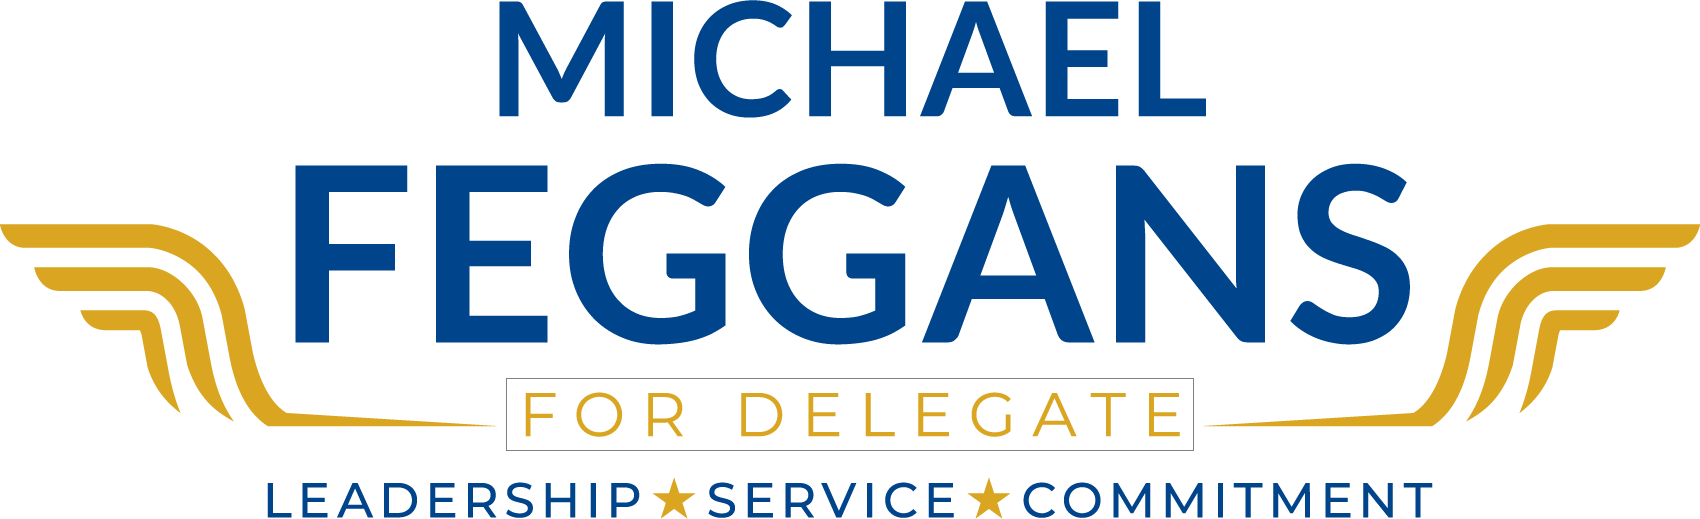 Michael Feggans for Delegate campaign logo